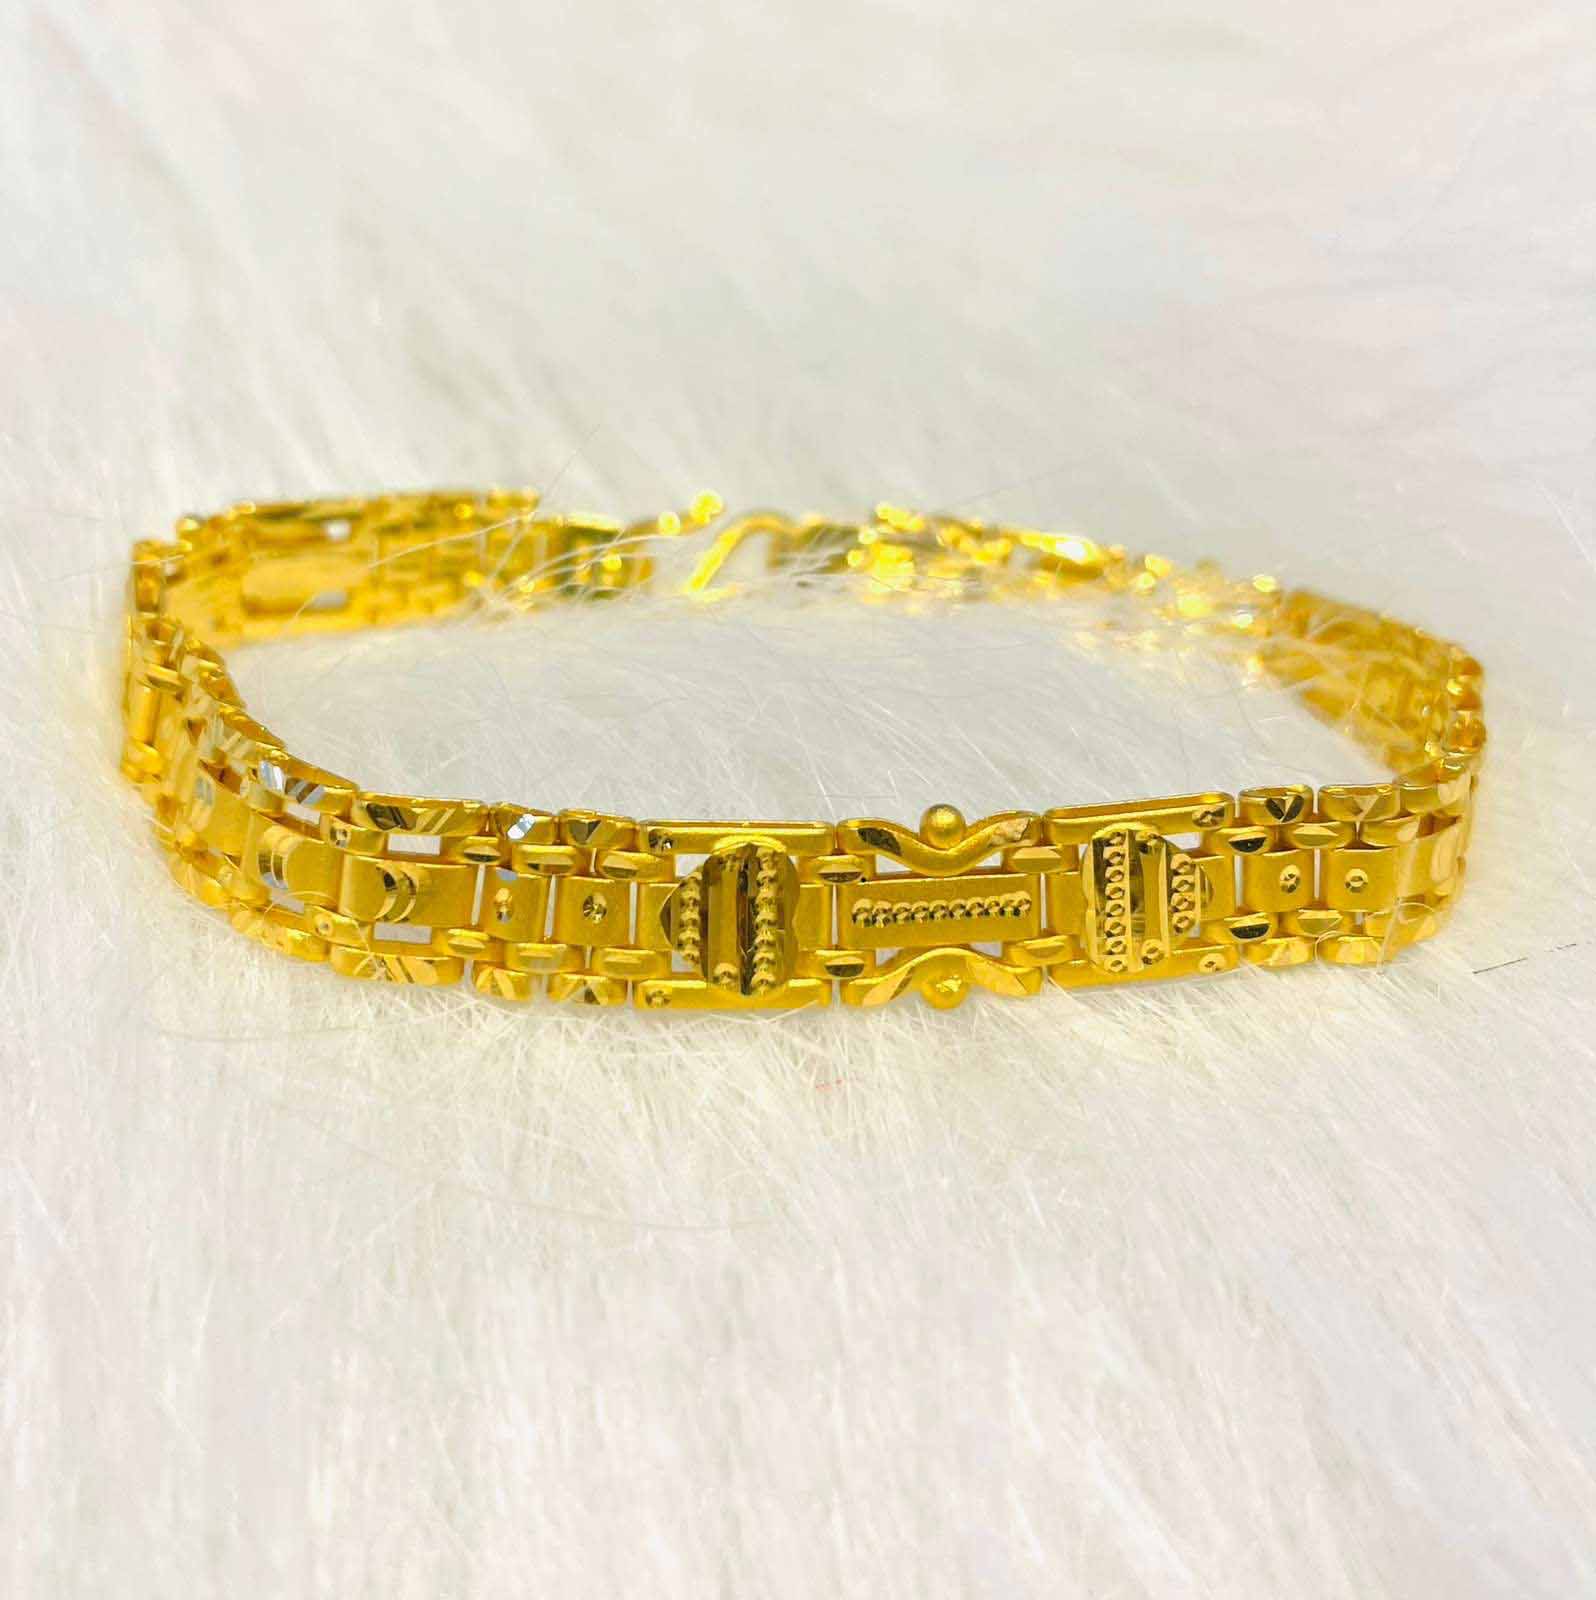 18 K Golden(Base) 40 Gm Female Gold Bracelet at best price in Ahore | ID:  2852679563197